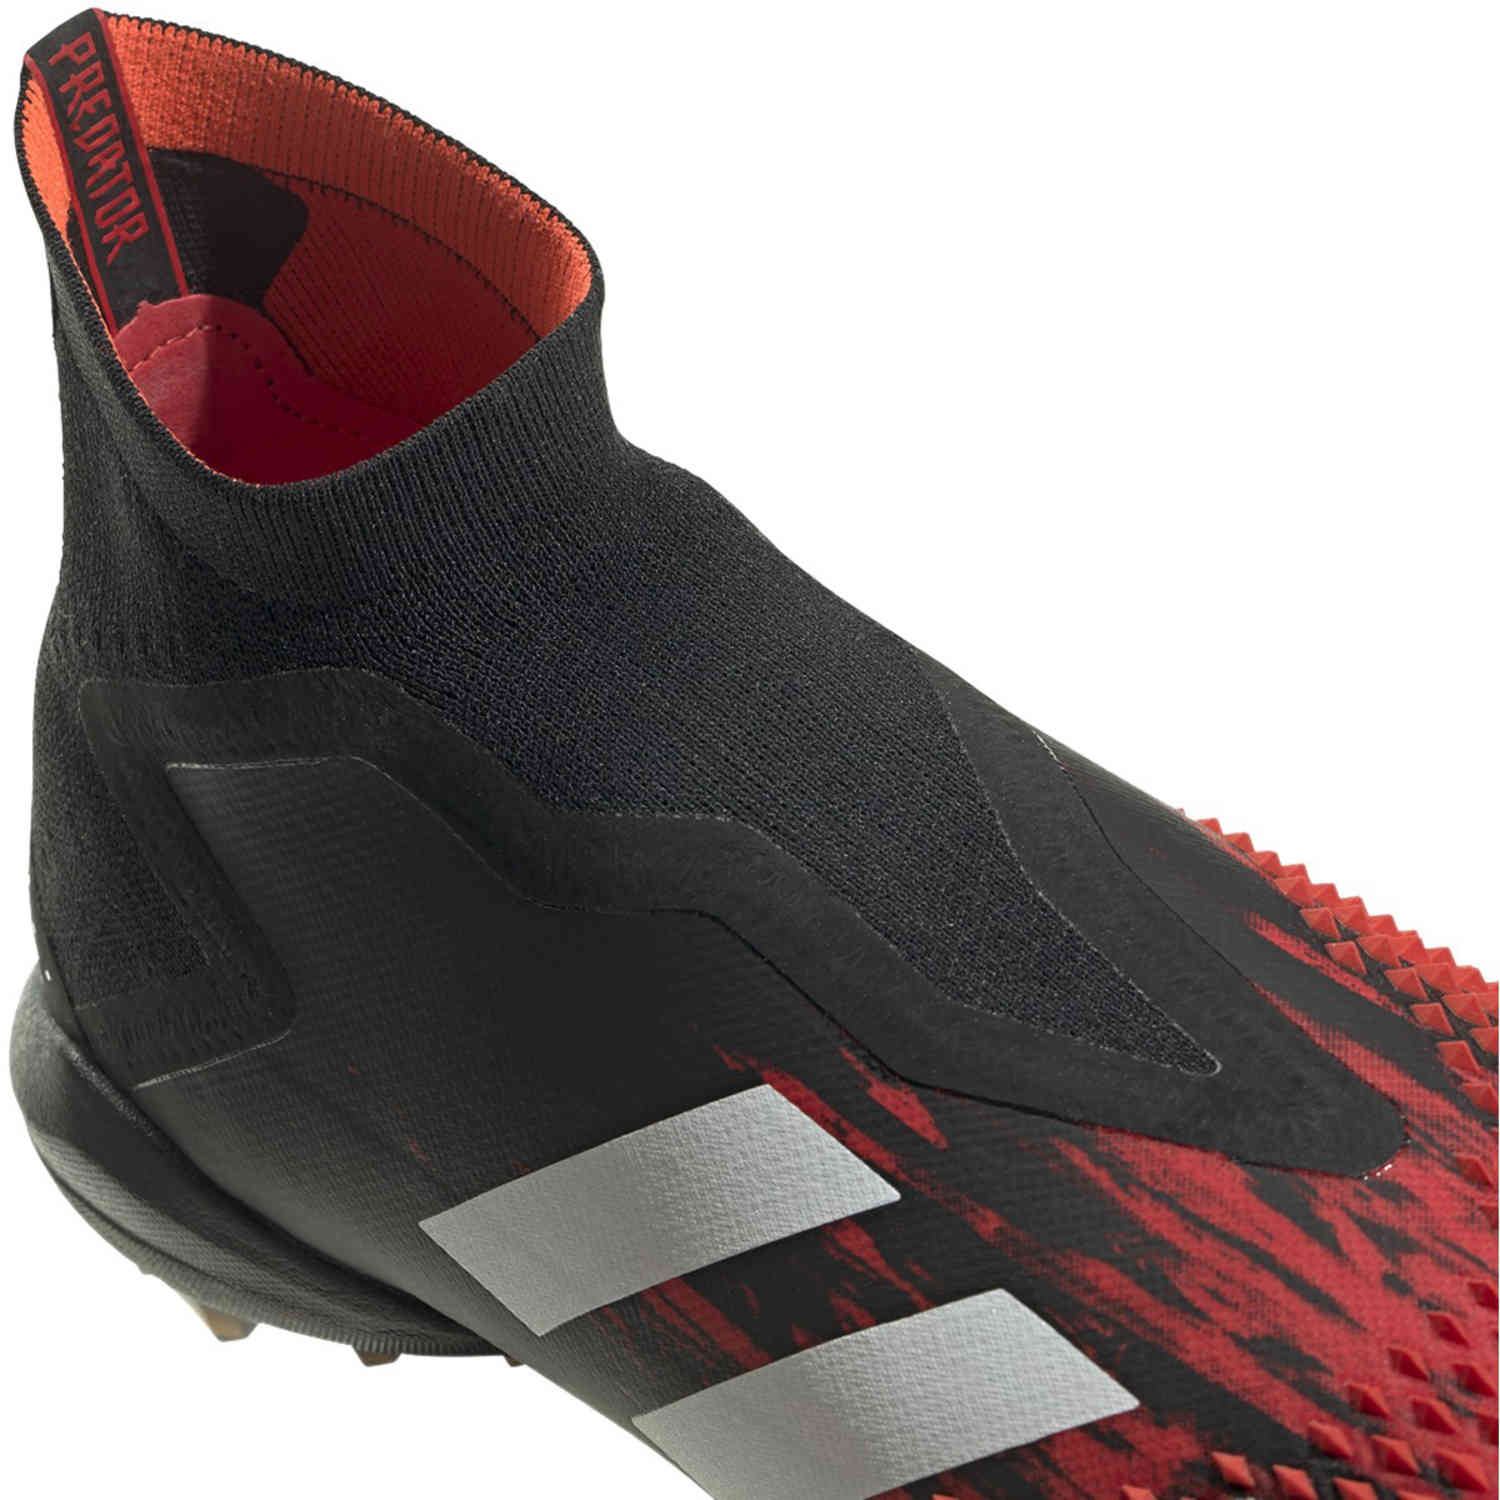 Adidas Predator Mutator 20+ Firm Ground Cleats Kids 6 from.